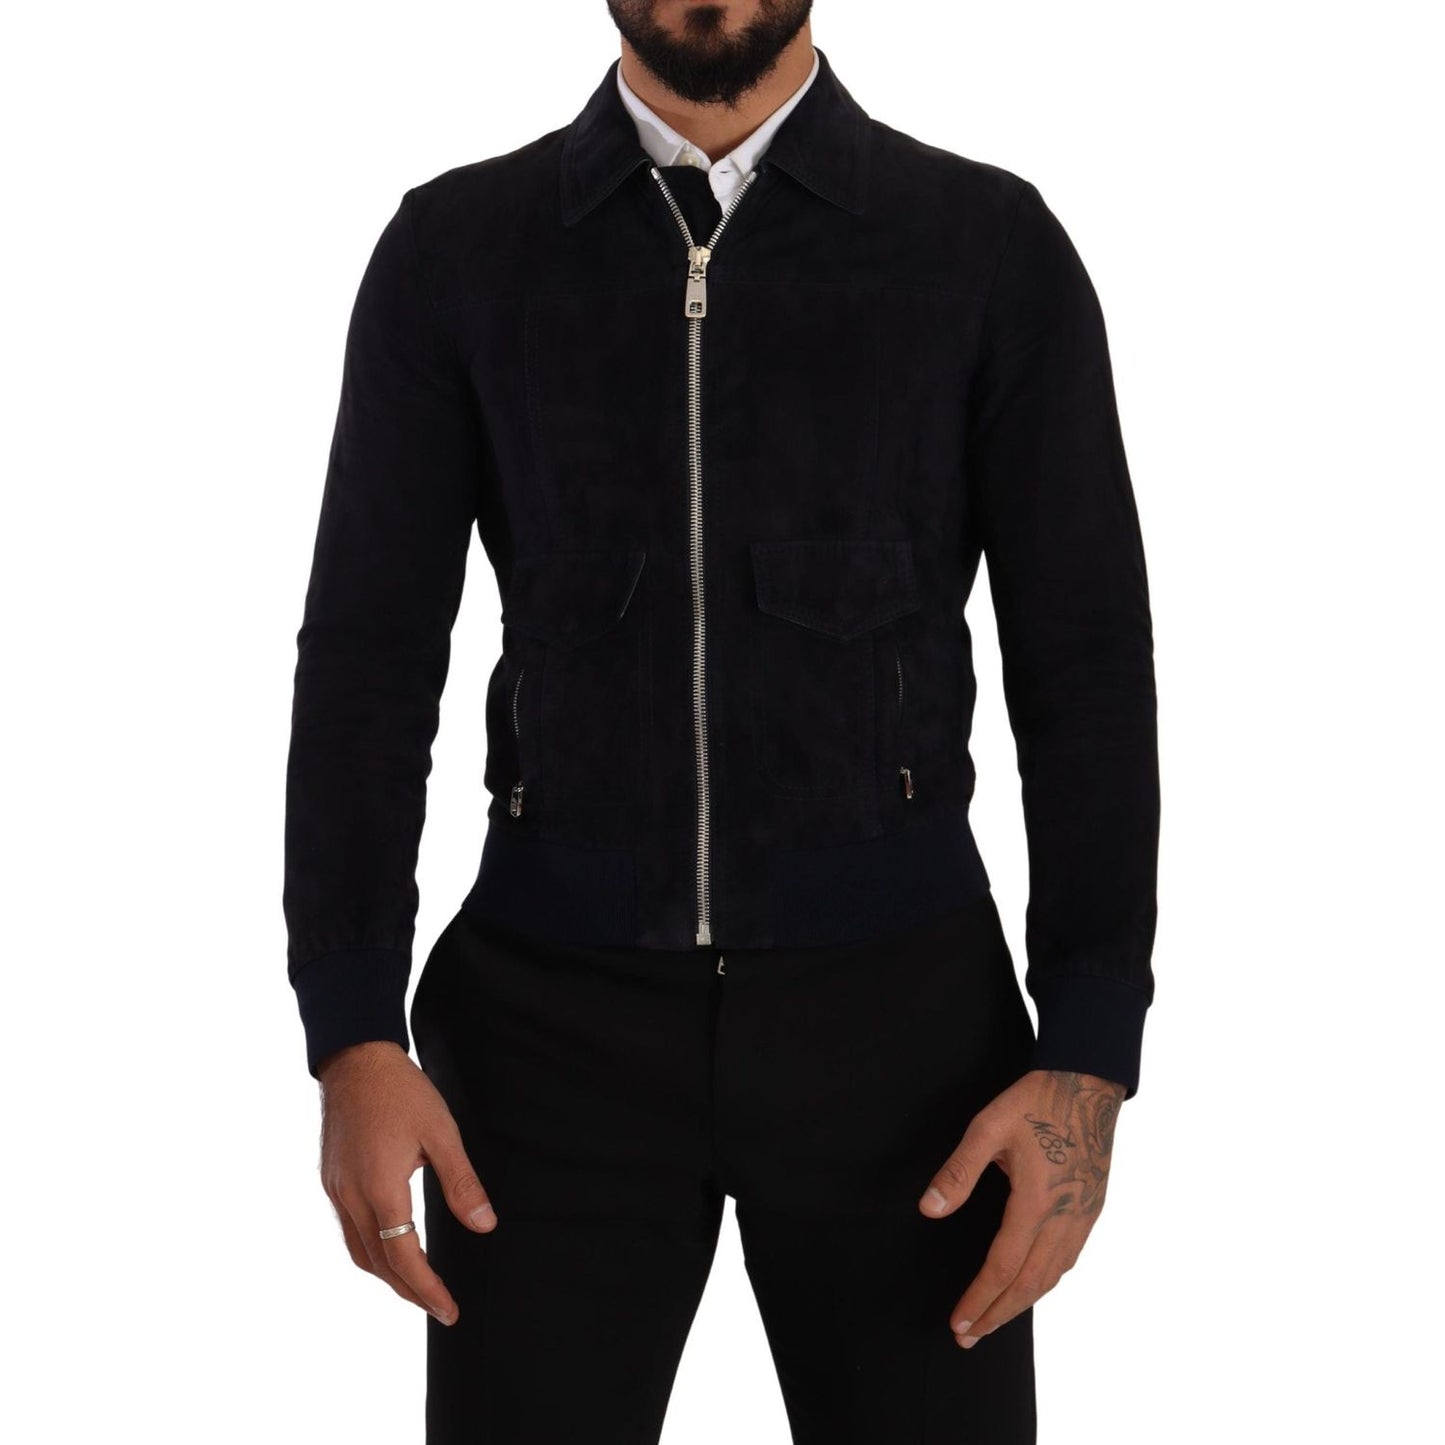 Dolce & Gabbana Elegant Blue Suede Short Jacket blue-suede-lambskin-leather-coat-jacket IMG_2999-scaled-98822daa-2f7.jpg